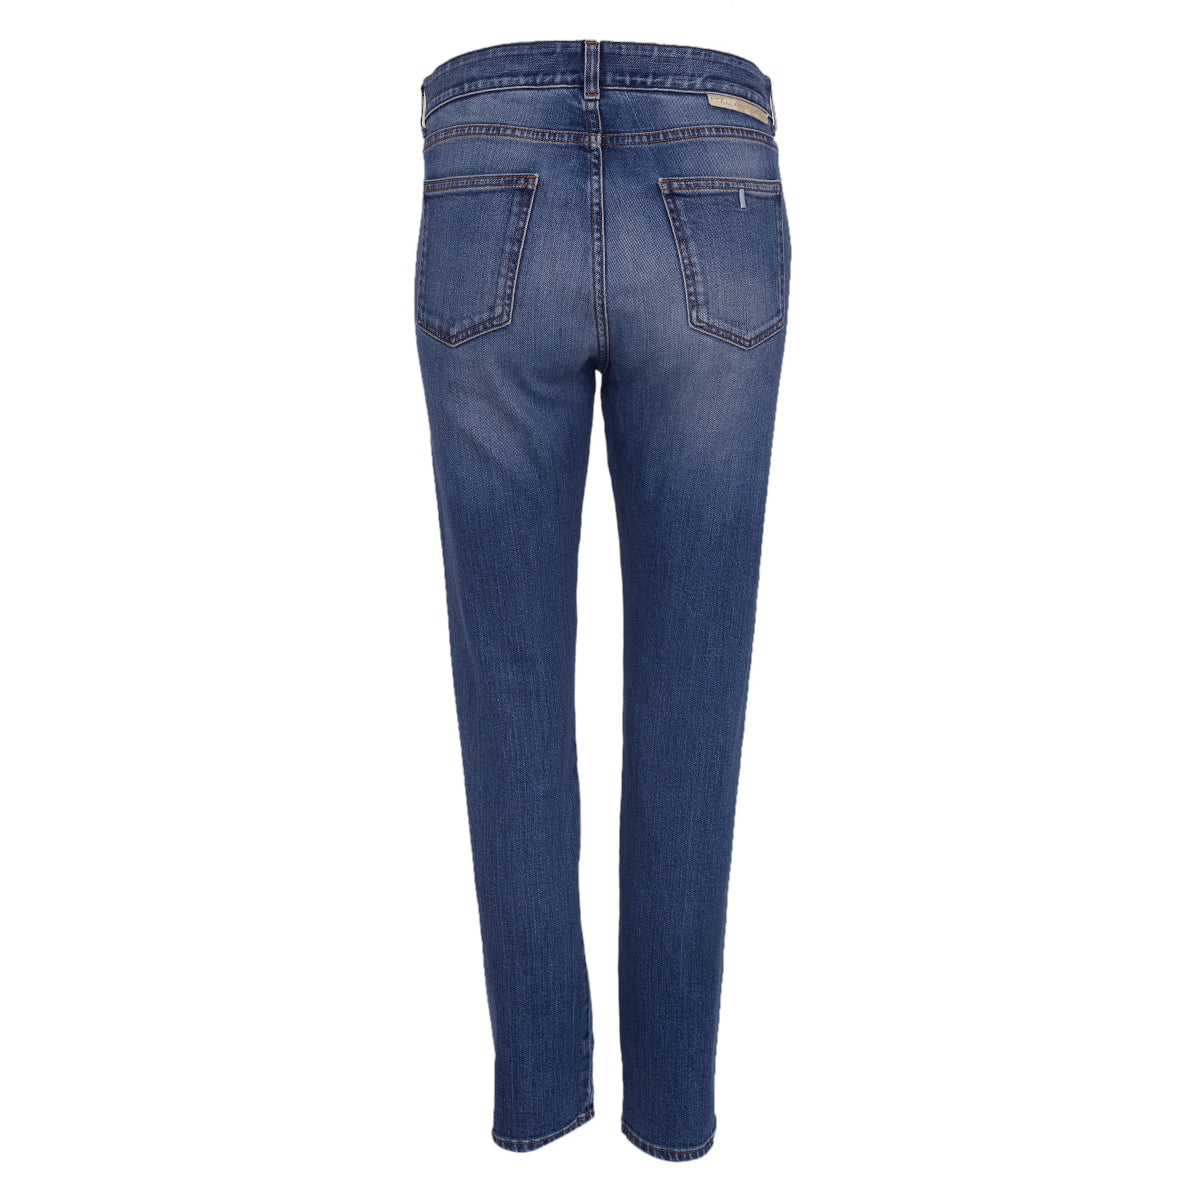 Calça Jeans Stella McCartney c/ Pássaro Bordado na lateral Tam.28 EUR)